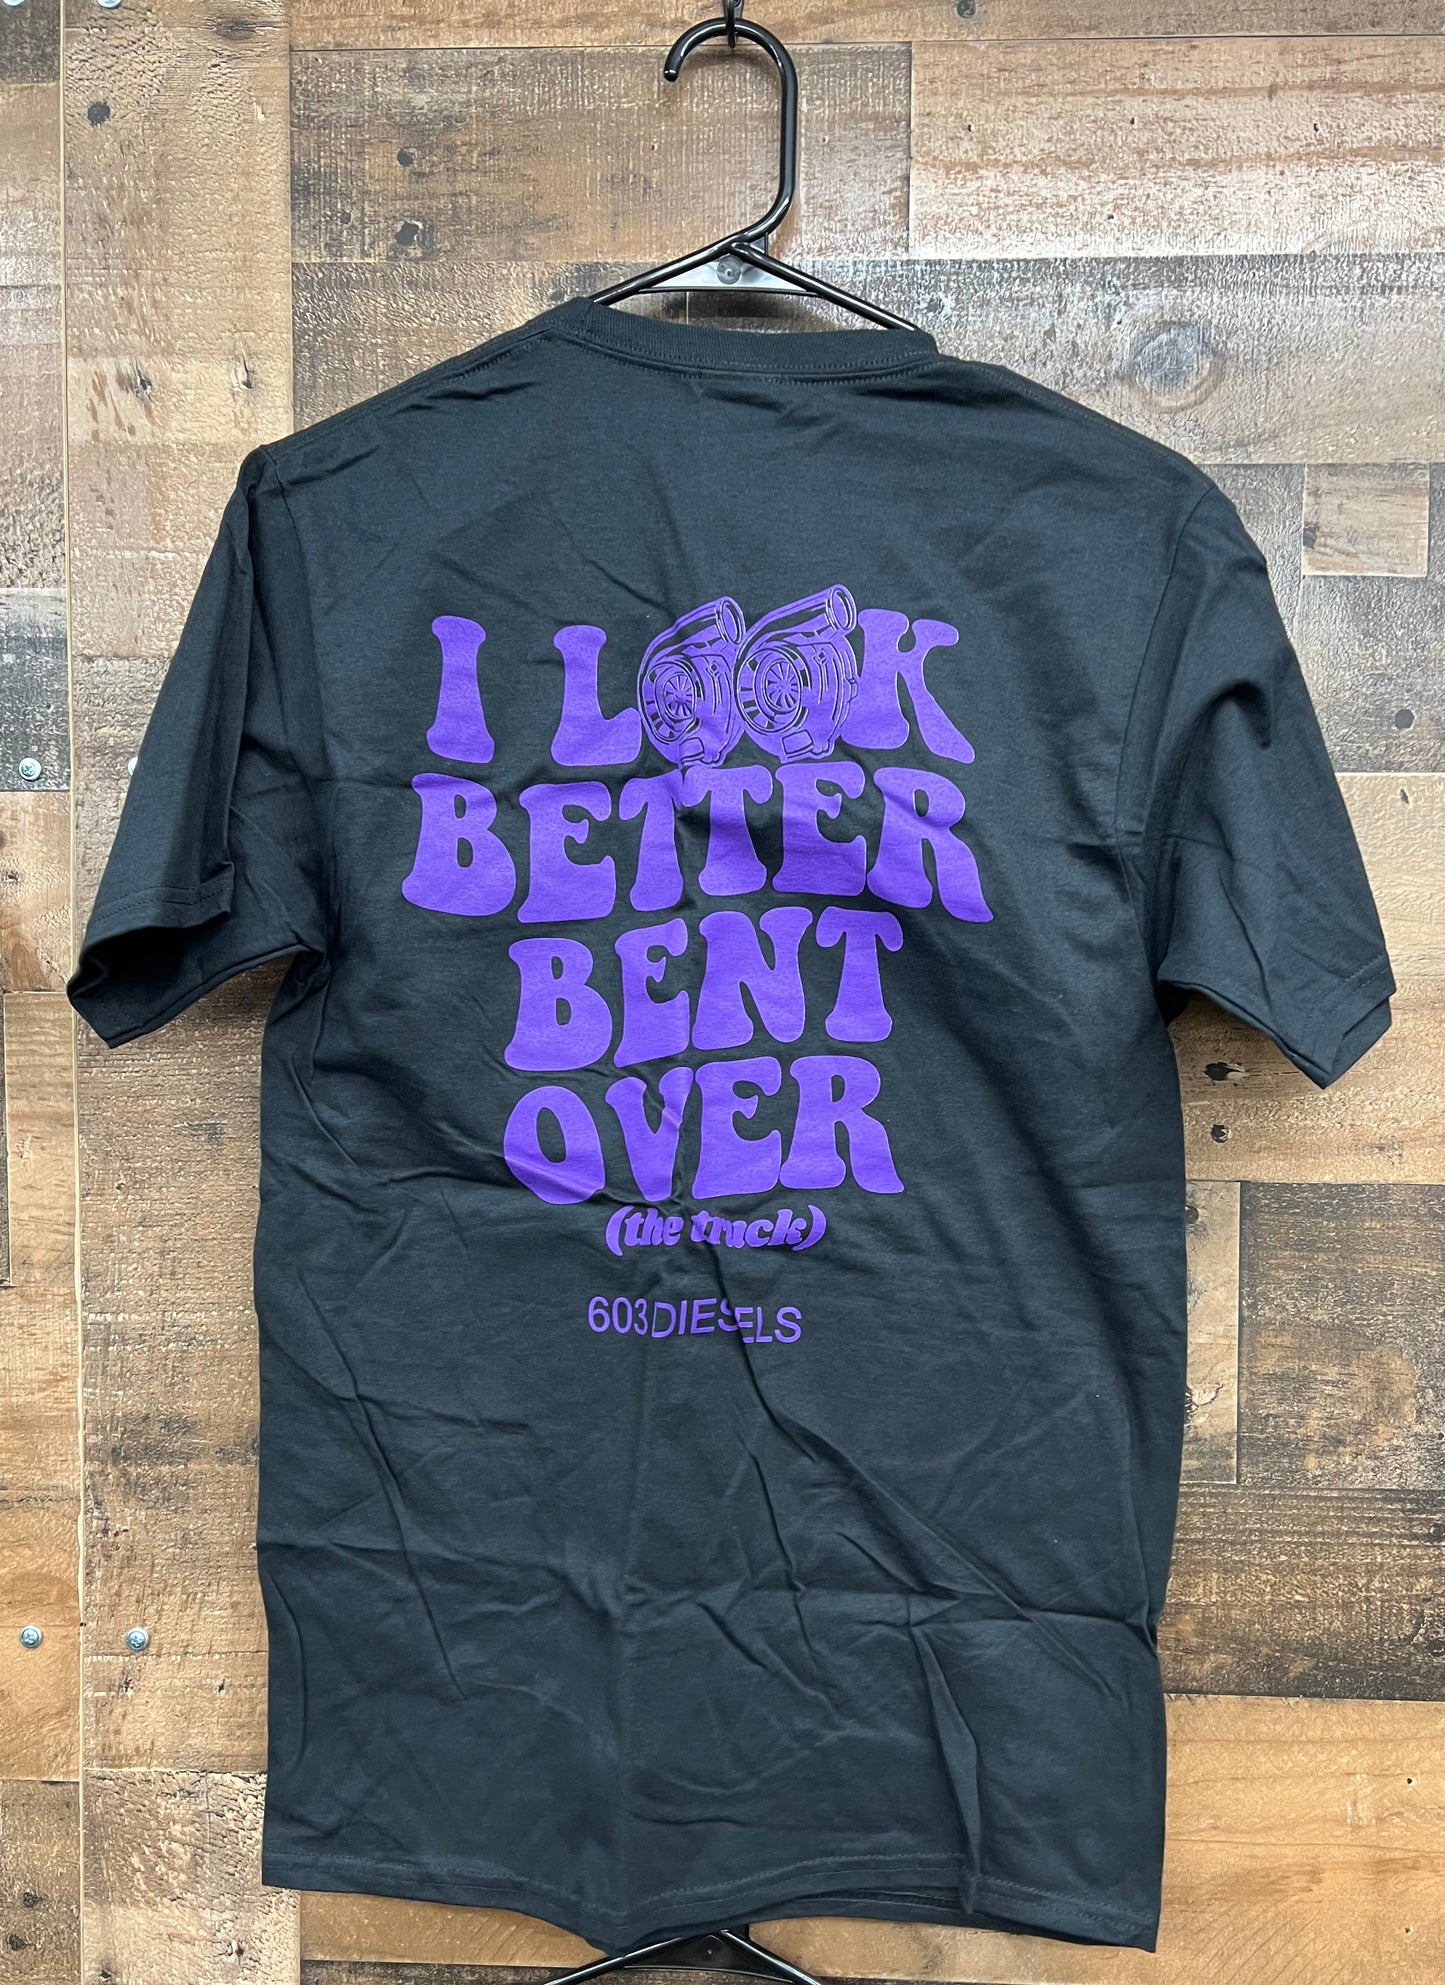 Look Better Bent Over T-shirt